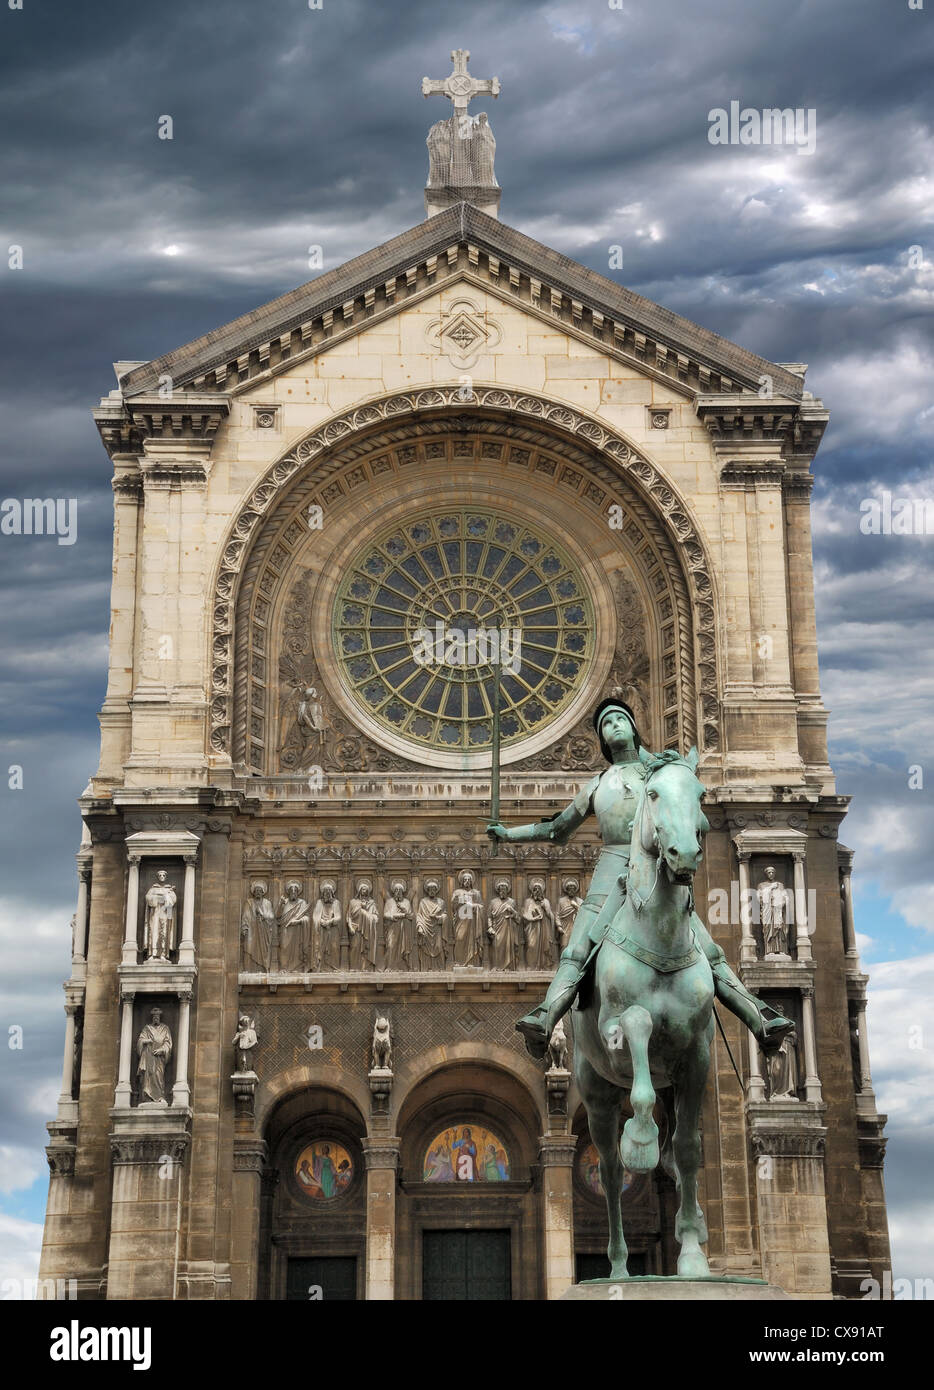 The Church of St. Augustine (Église Saint-Augustin de Paris) and equestrian statue of Joan of Arc (Jeanne d'Arc), by Paul Dubois Stock Photo